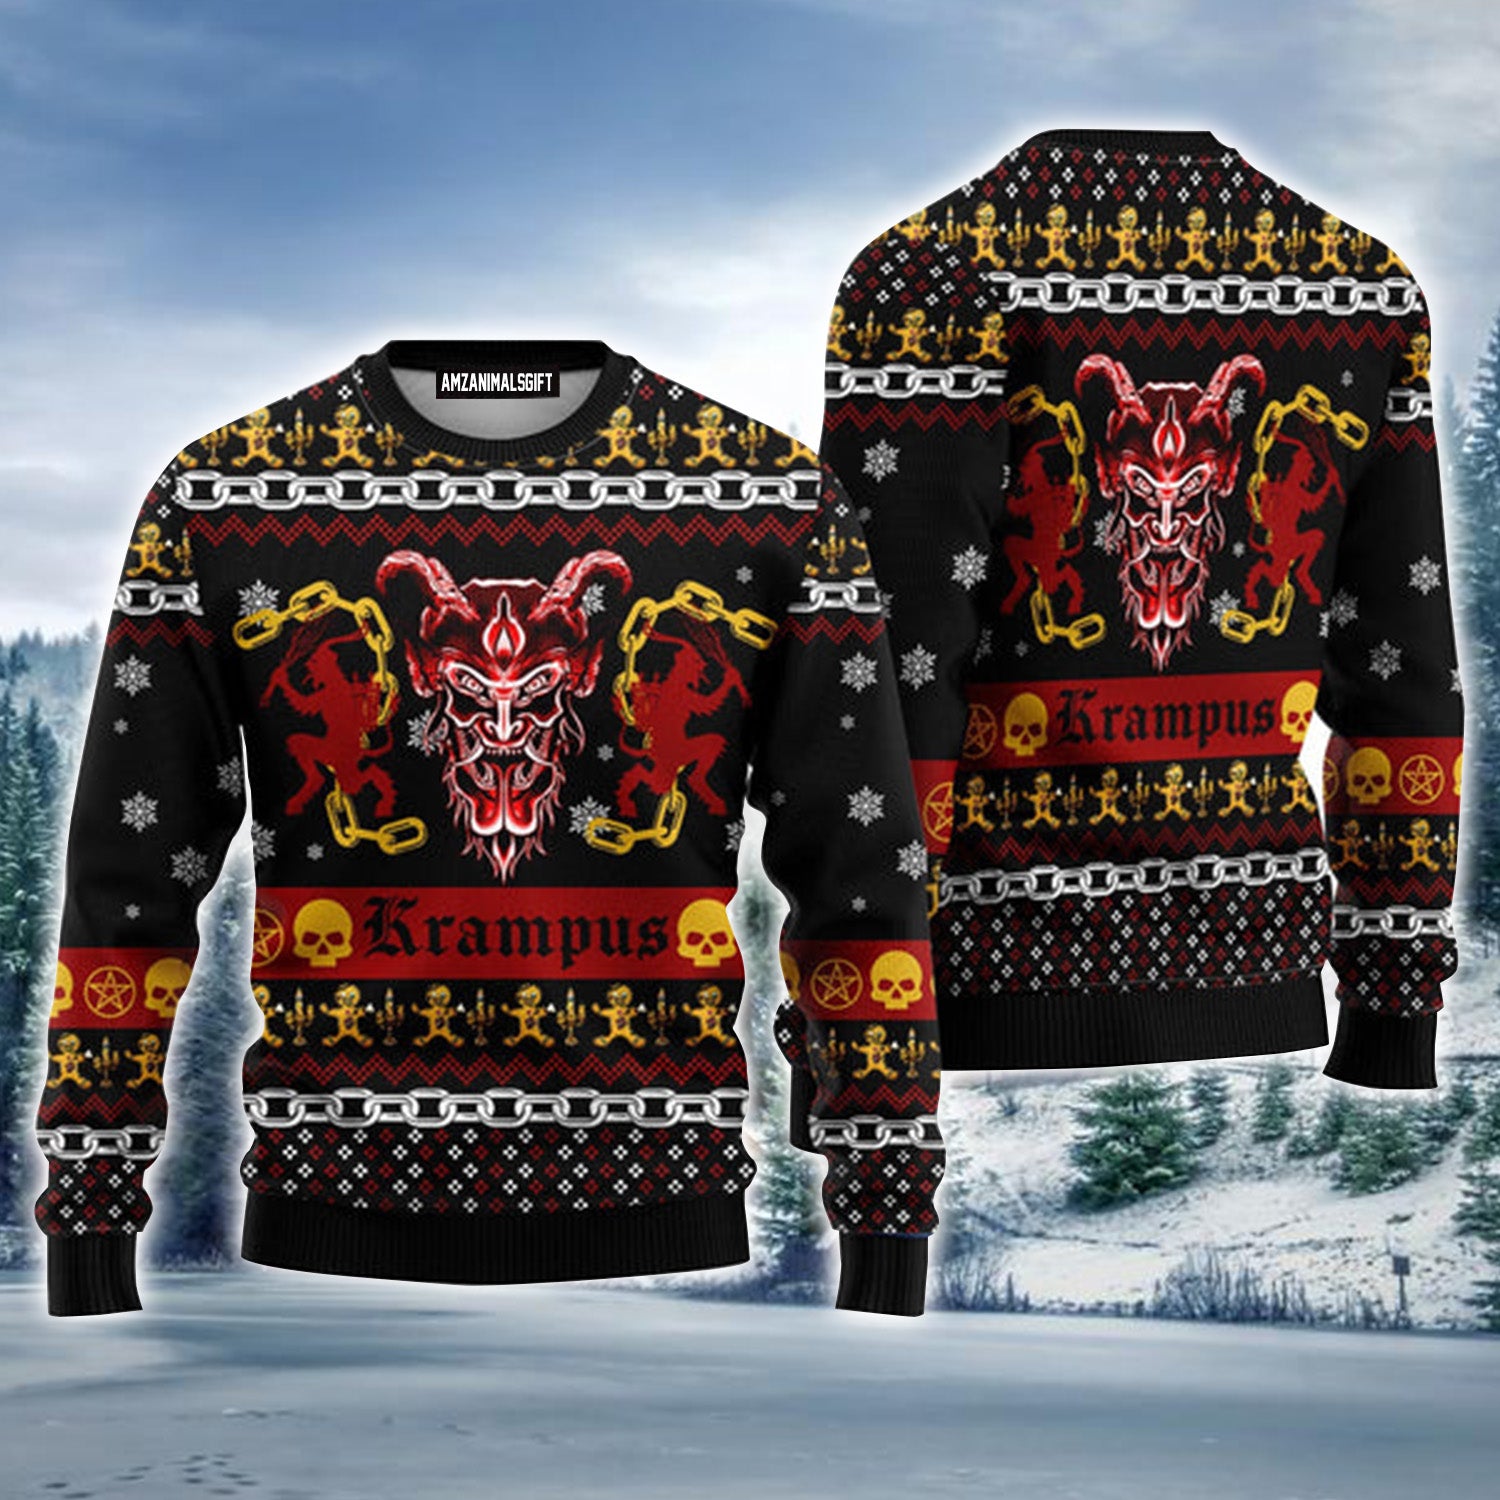 Krampus Horror Urly Christmas Sweater, Christmas Sweater For Men & Women - Perfect Gift For Christmas, New Year, Winter Holiday